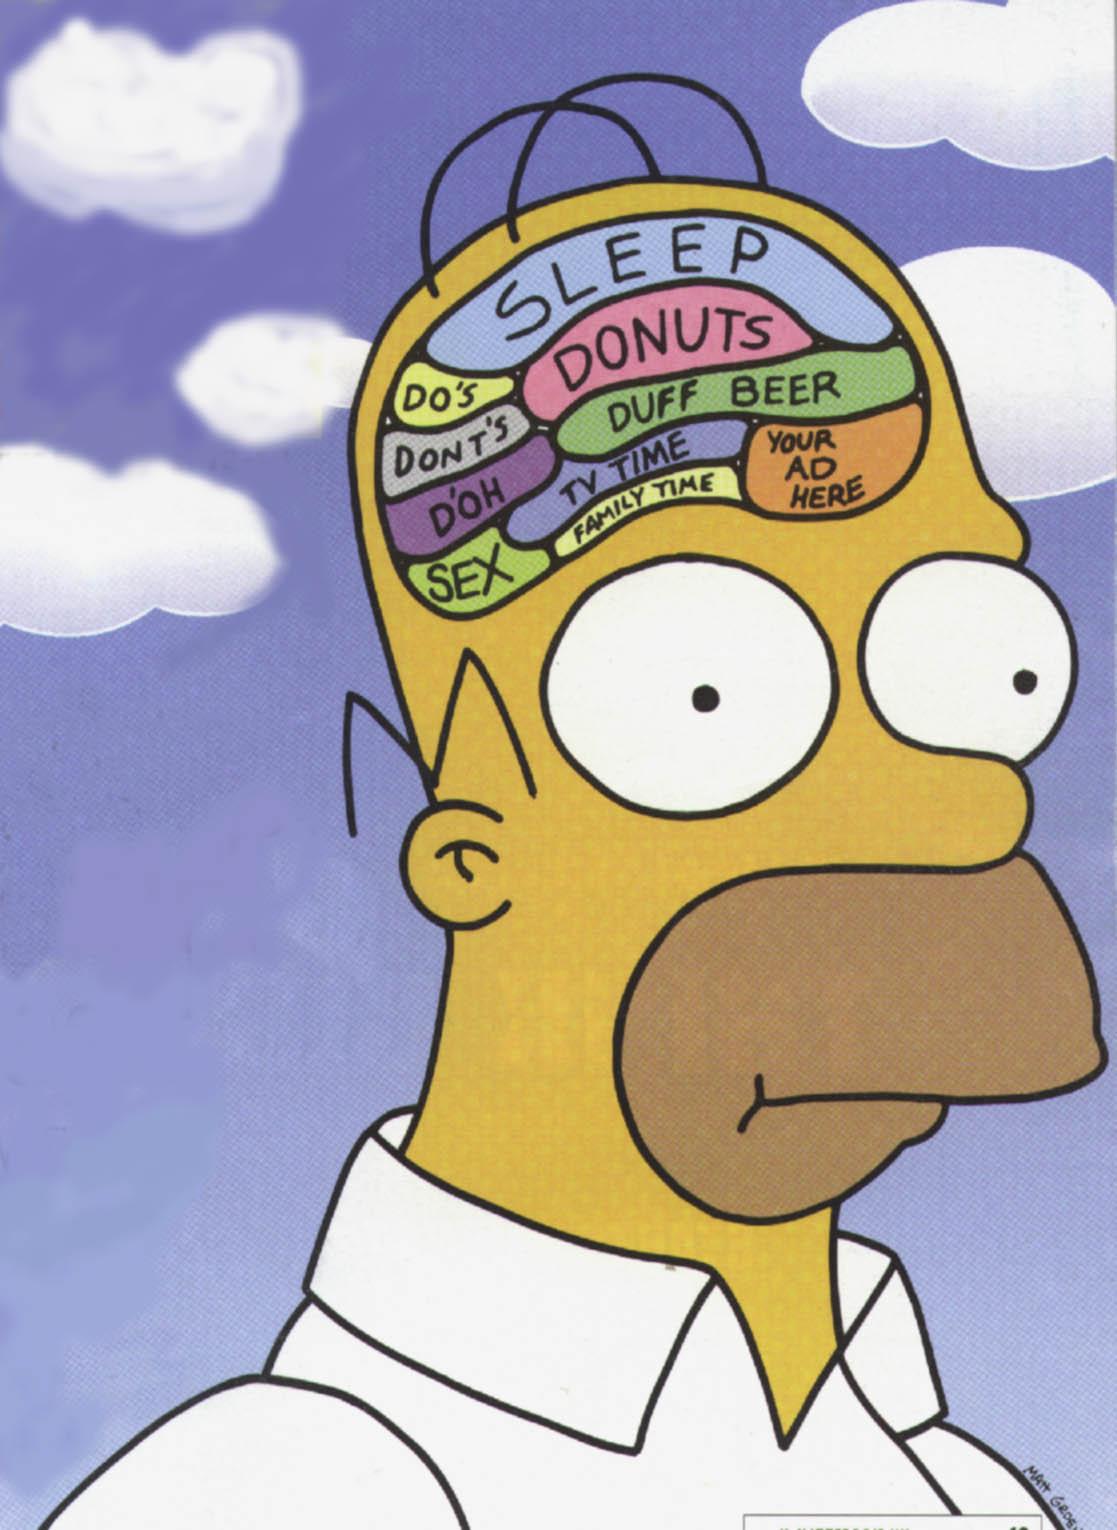 Homer Simpson Brain Scan